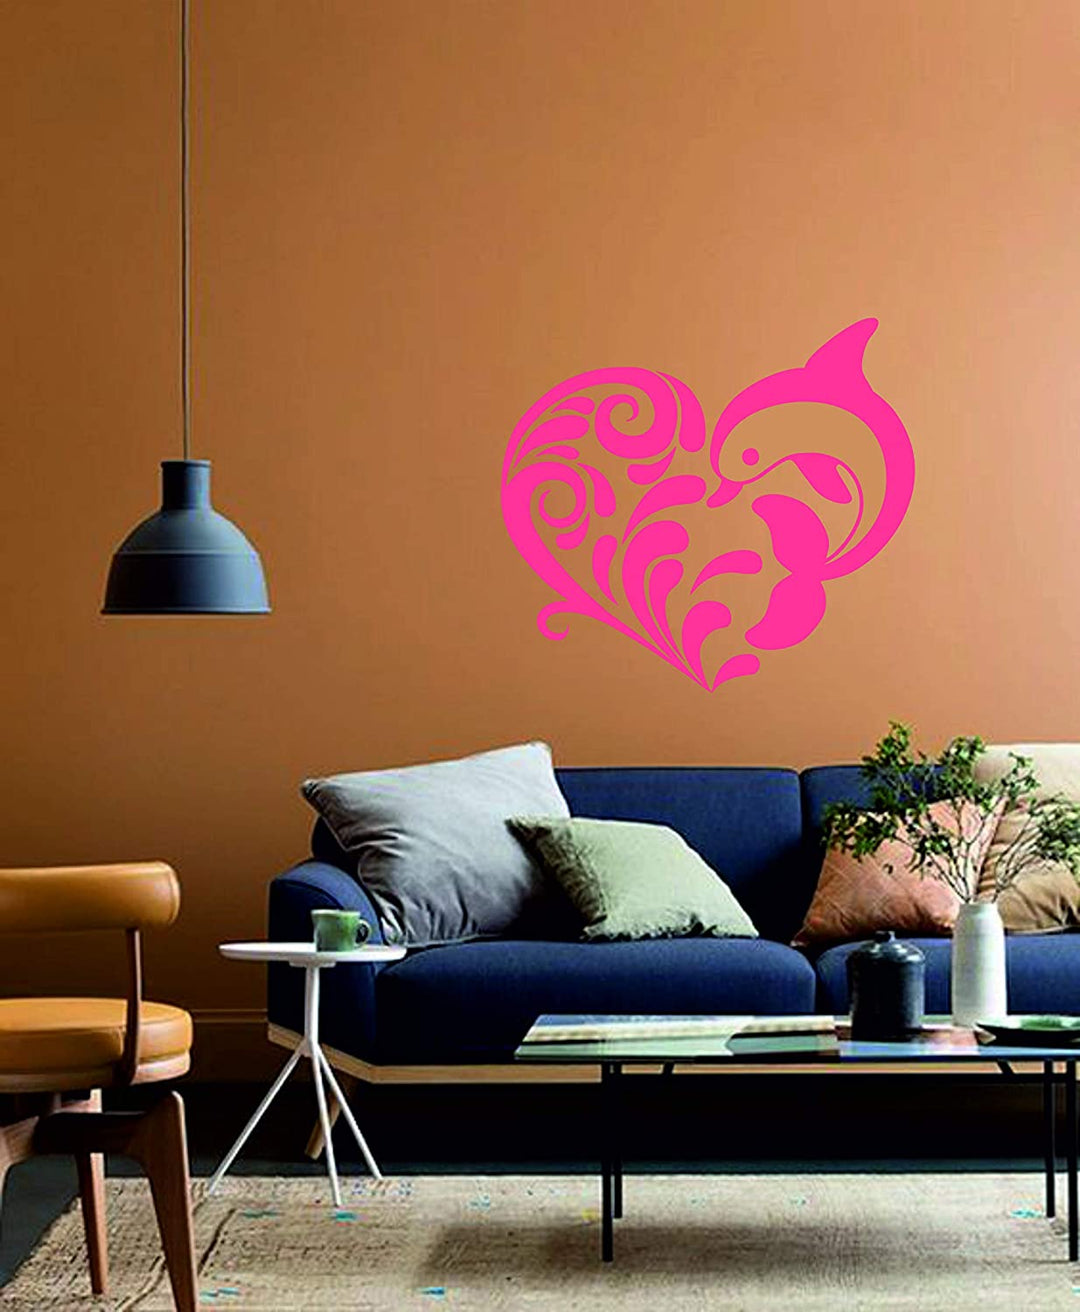 Heart Dolphin Vinyl Wall Sticker for Wall Decoration_(58.5 X 52.9cm)